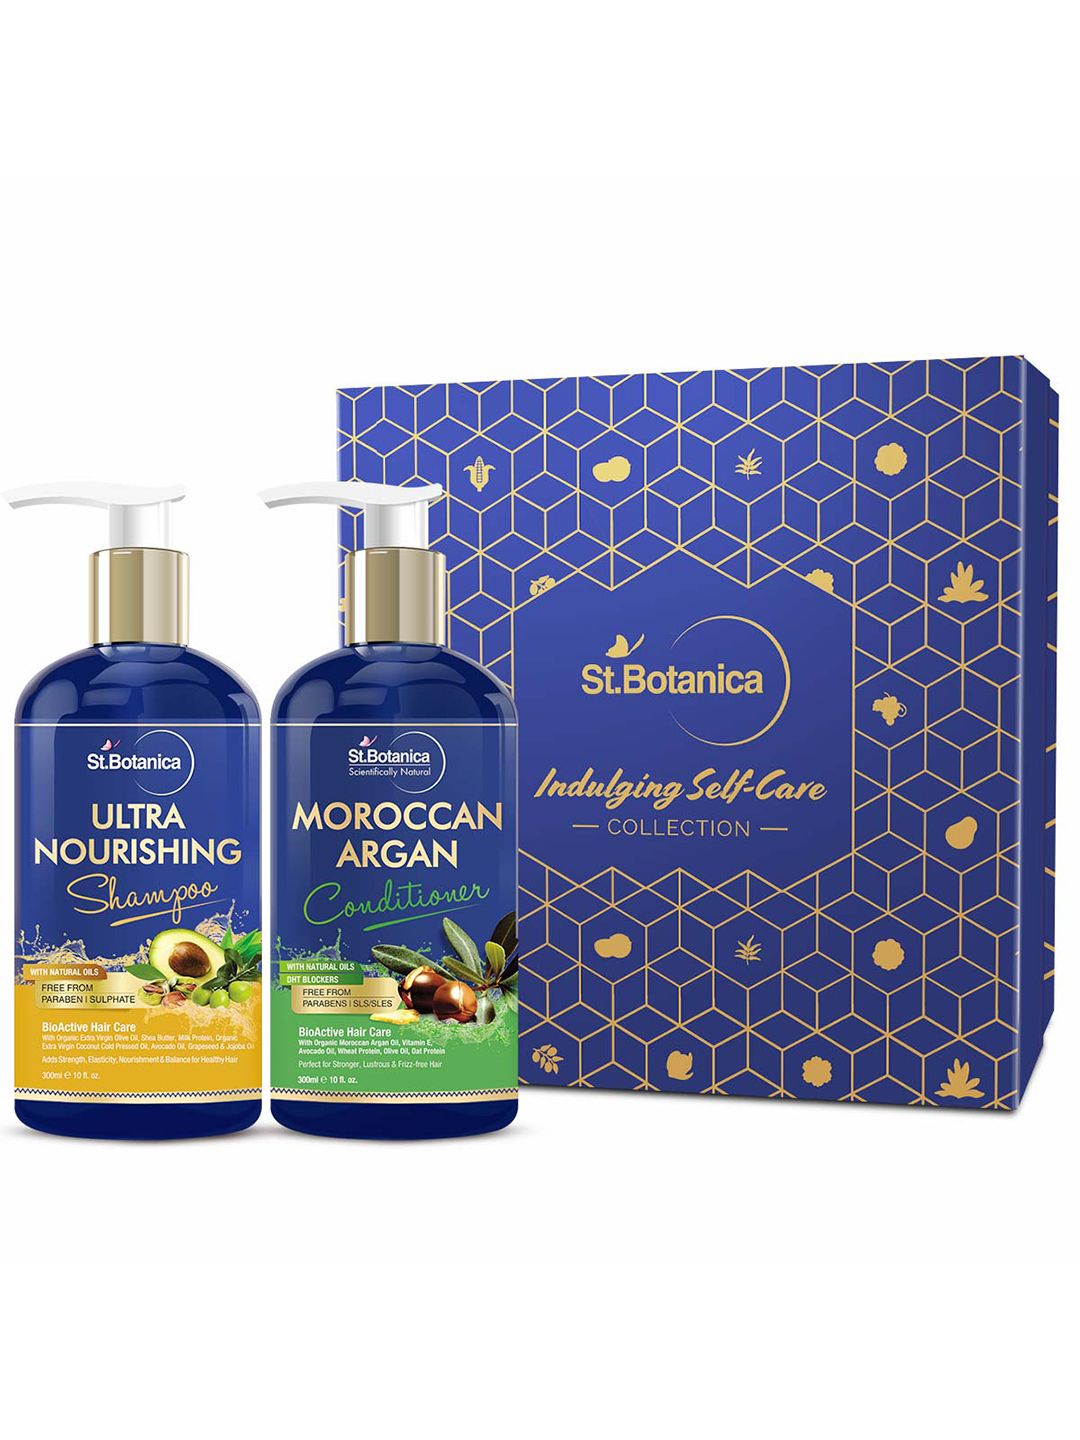 St.Botanica Ultra Nourishing Hair Shampoo + Moroccan Argan Hair Conditioner 300ml Each Price in India